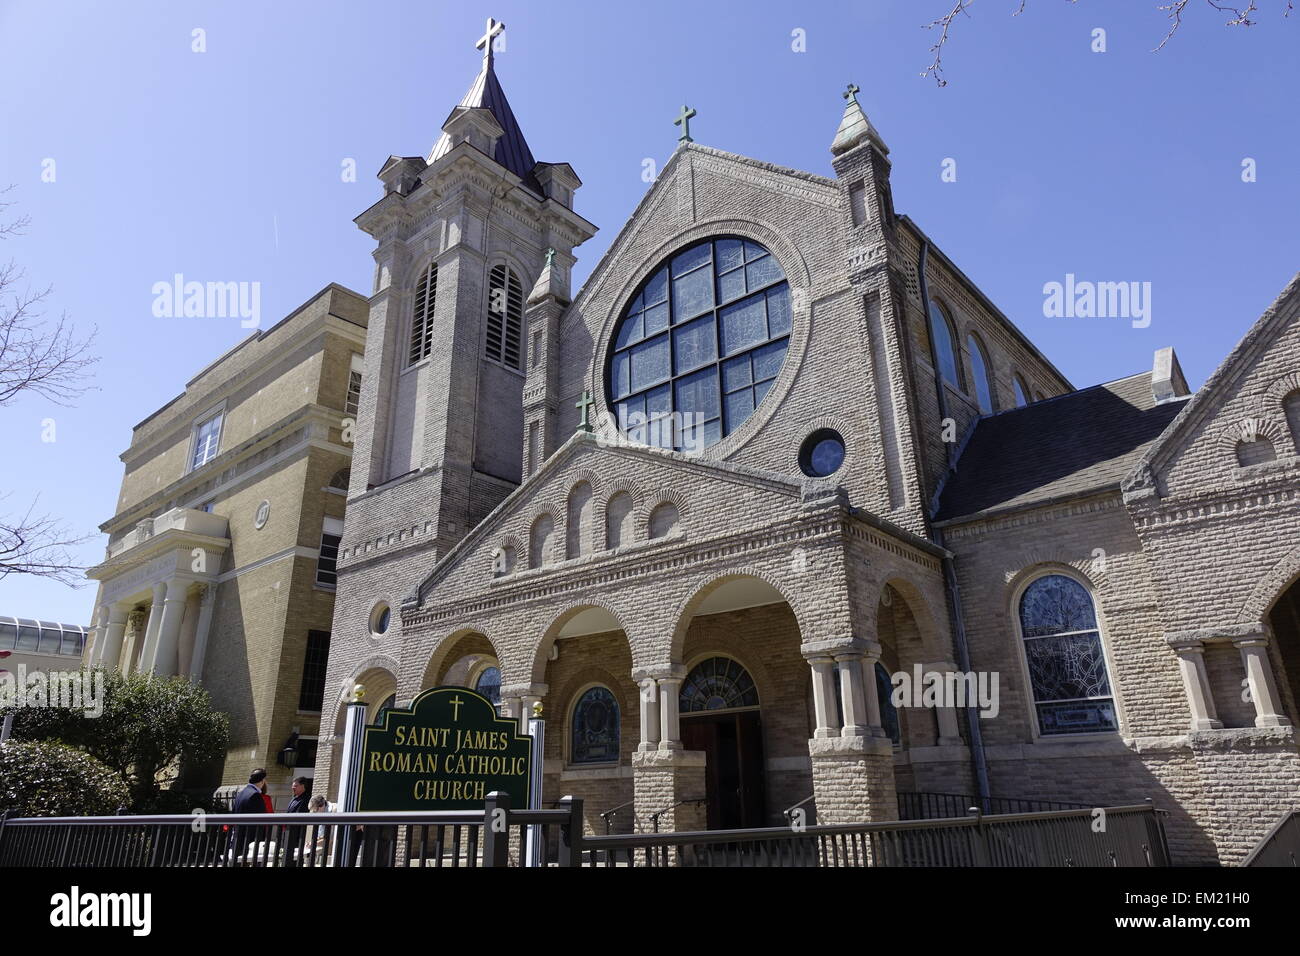 Red Bank, Middlesex County, New Jersey. St. James Roman Catholic Church  Stockfotografie - Alamy